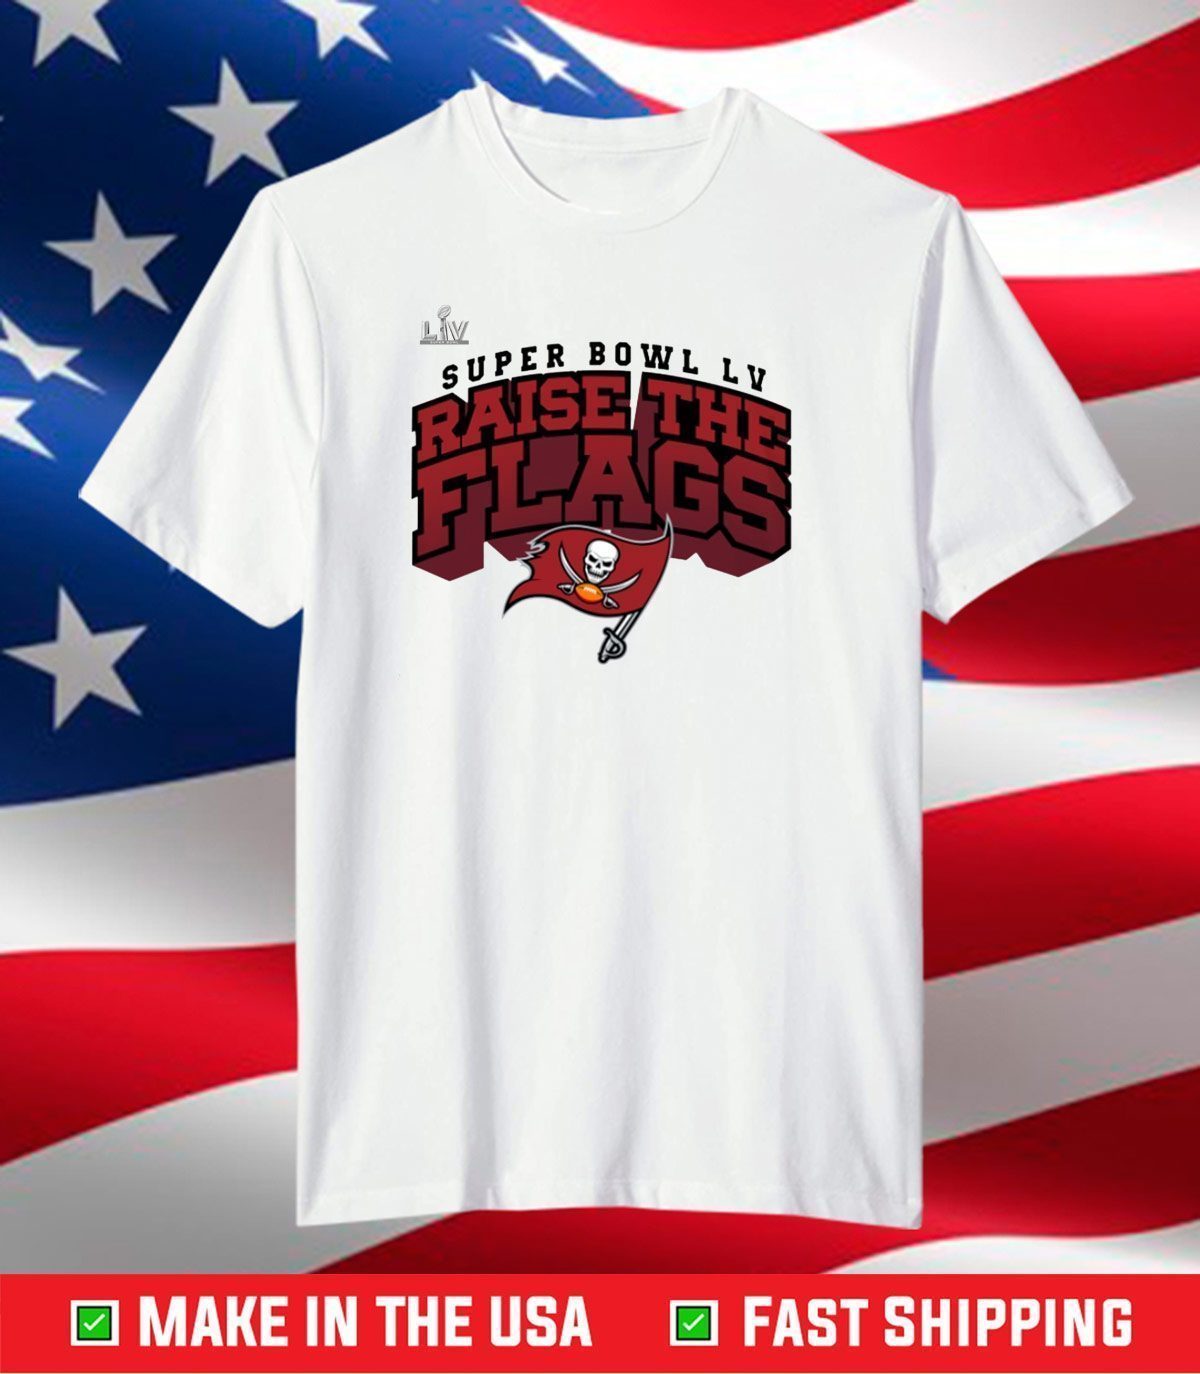 Tampa Bay Buccaneers Super Bowl LV Raise The Flags Shirt - Teeducks